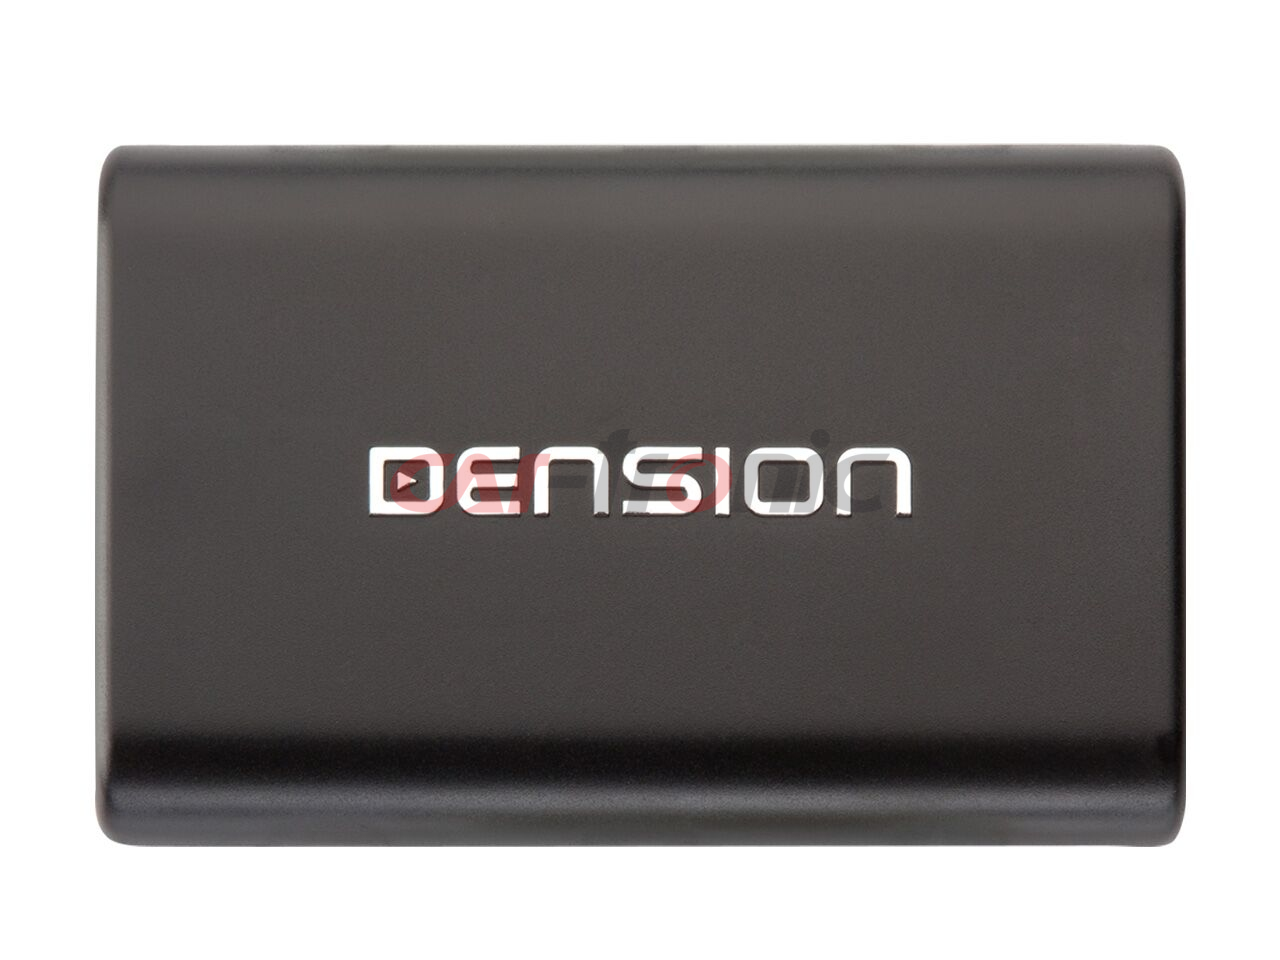 Cyfrowa zmieniarka Dension USB,iPod,iPhone,AUX,ID3 - VW RCD310,RCD510